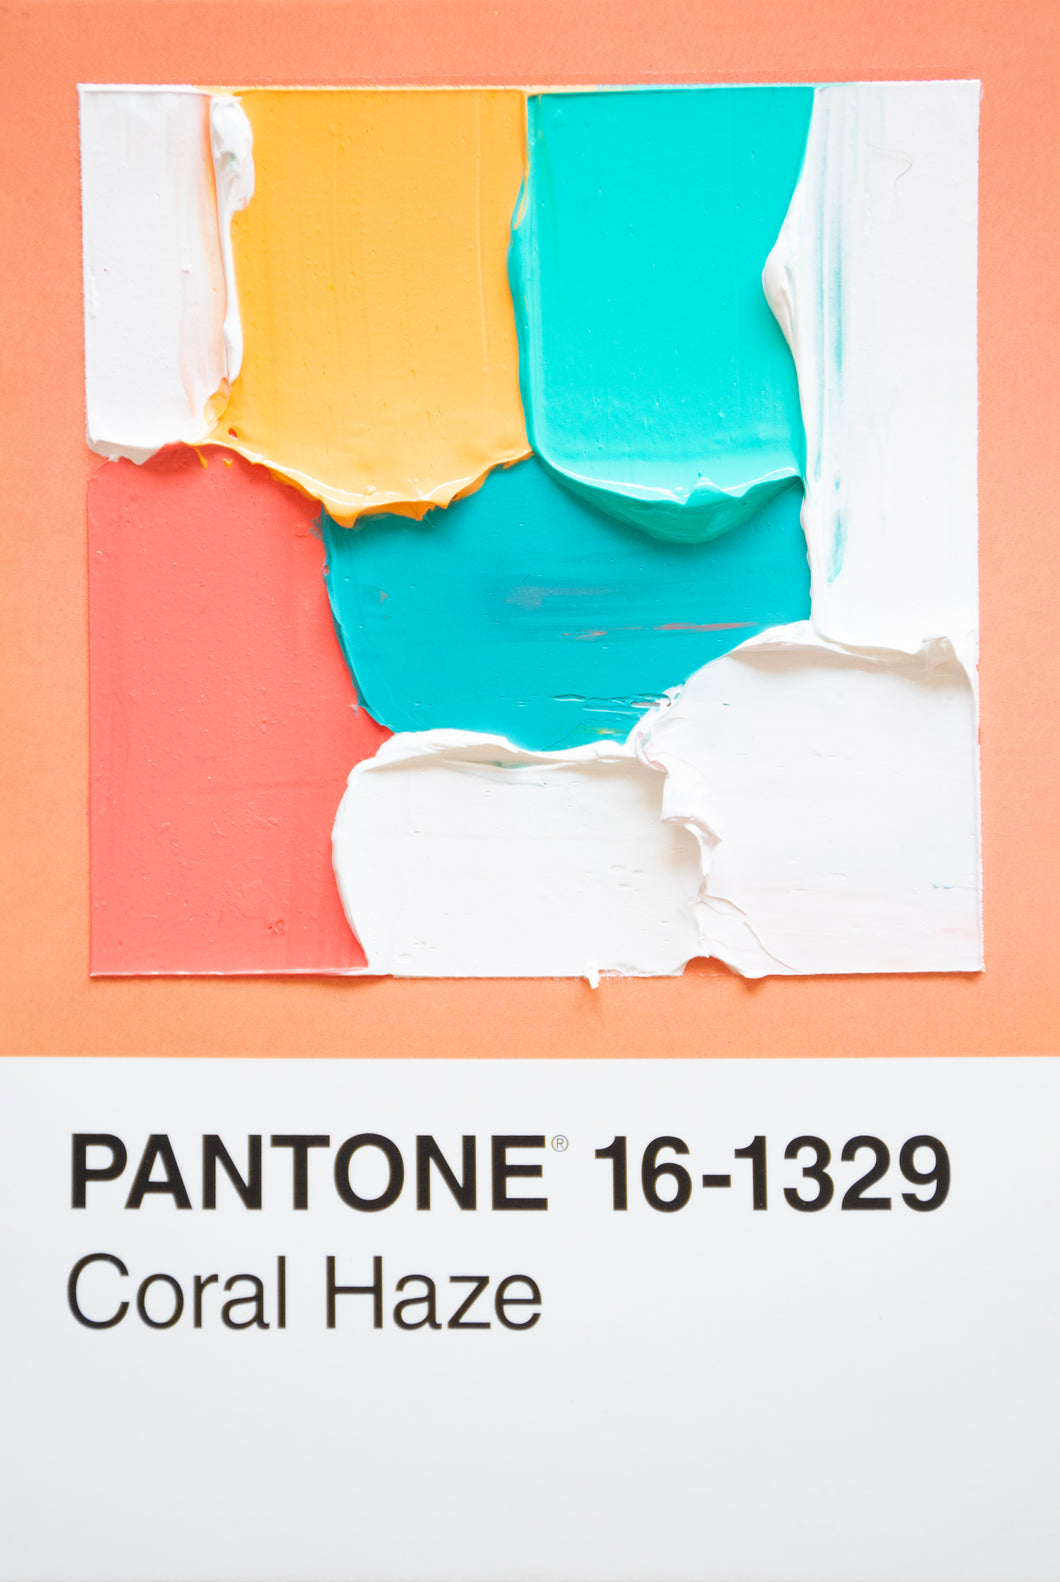 Pantone 16-1329 Coral Haze